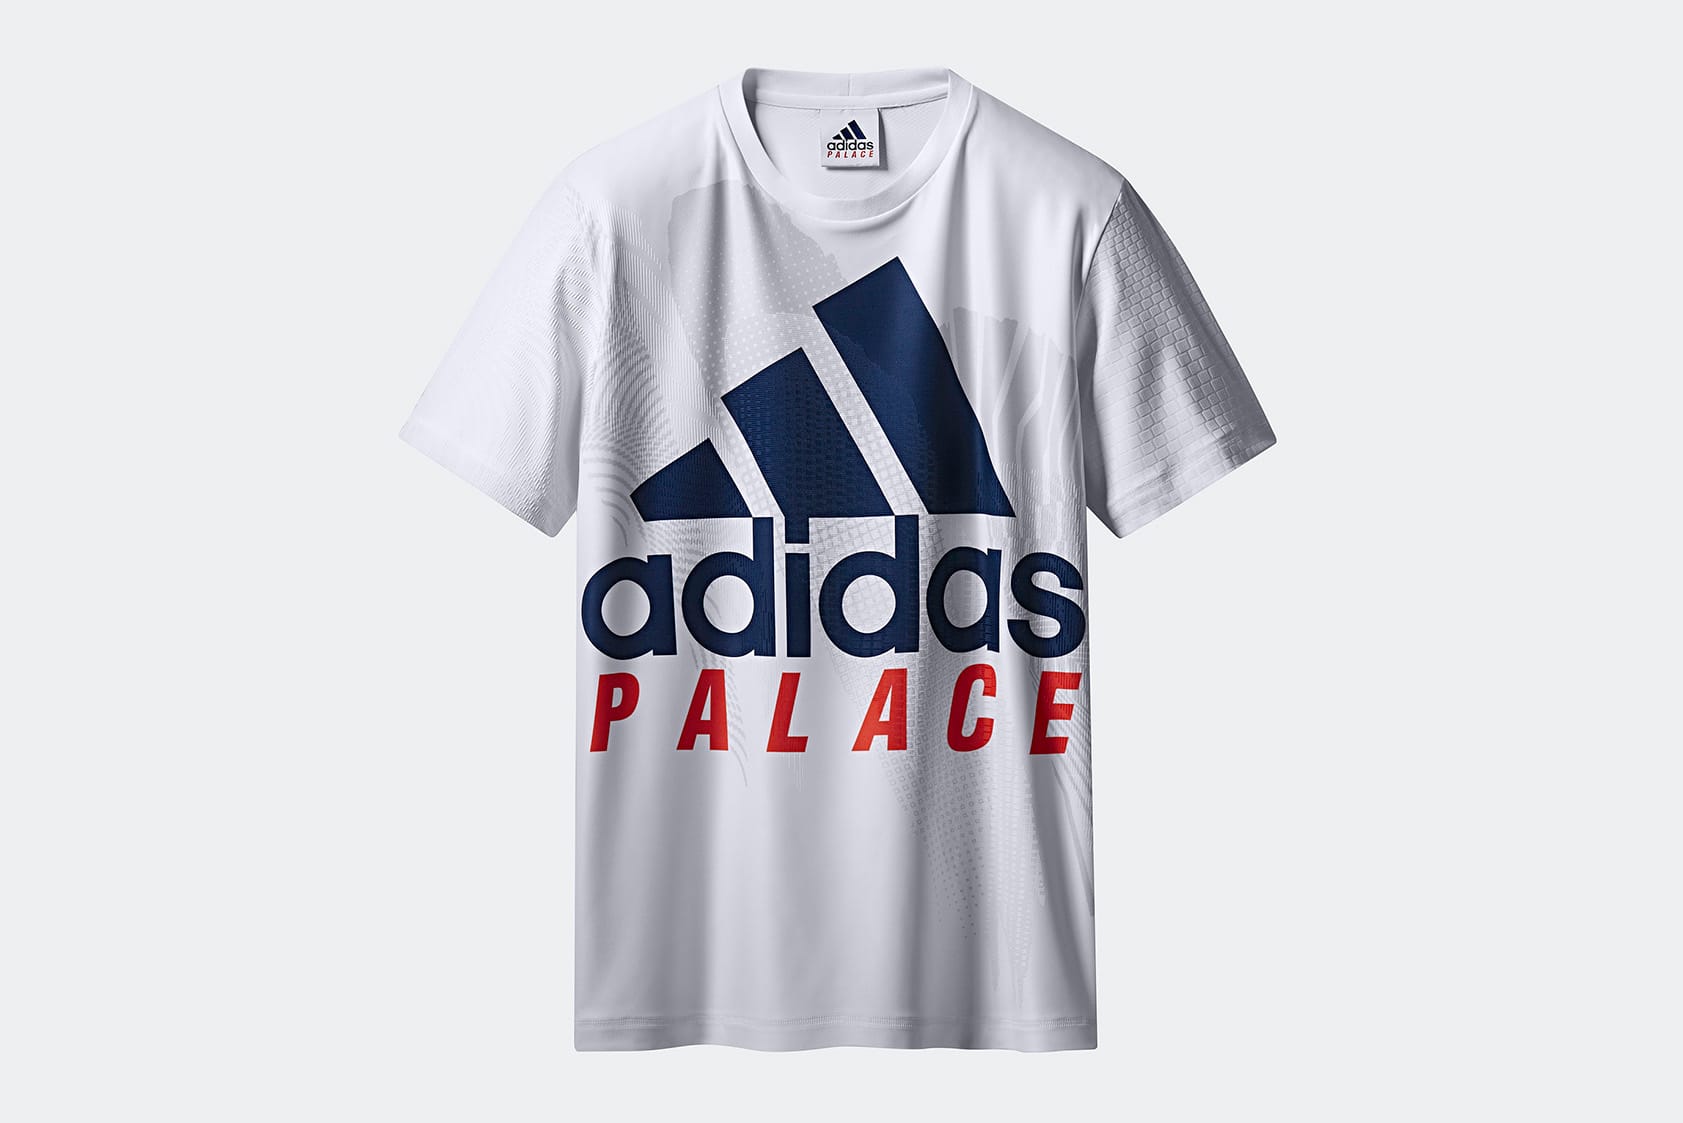 adidas palace 2018